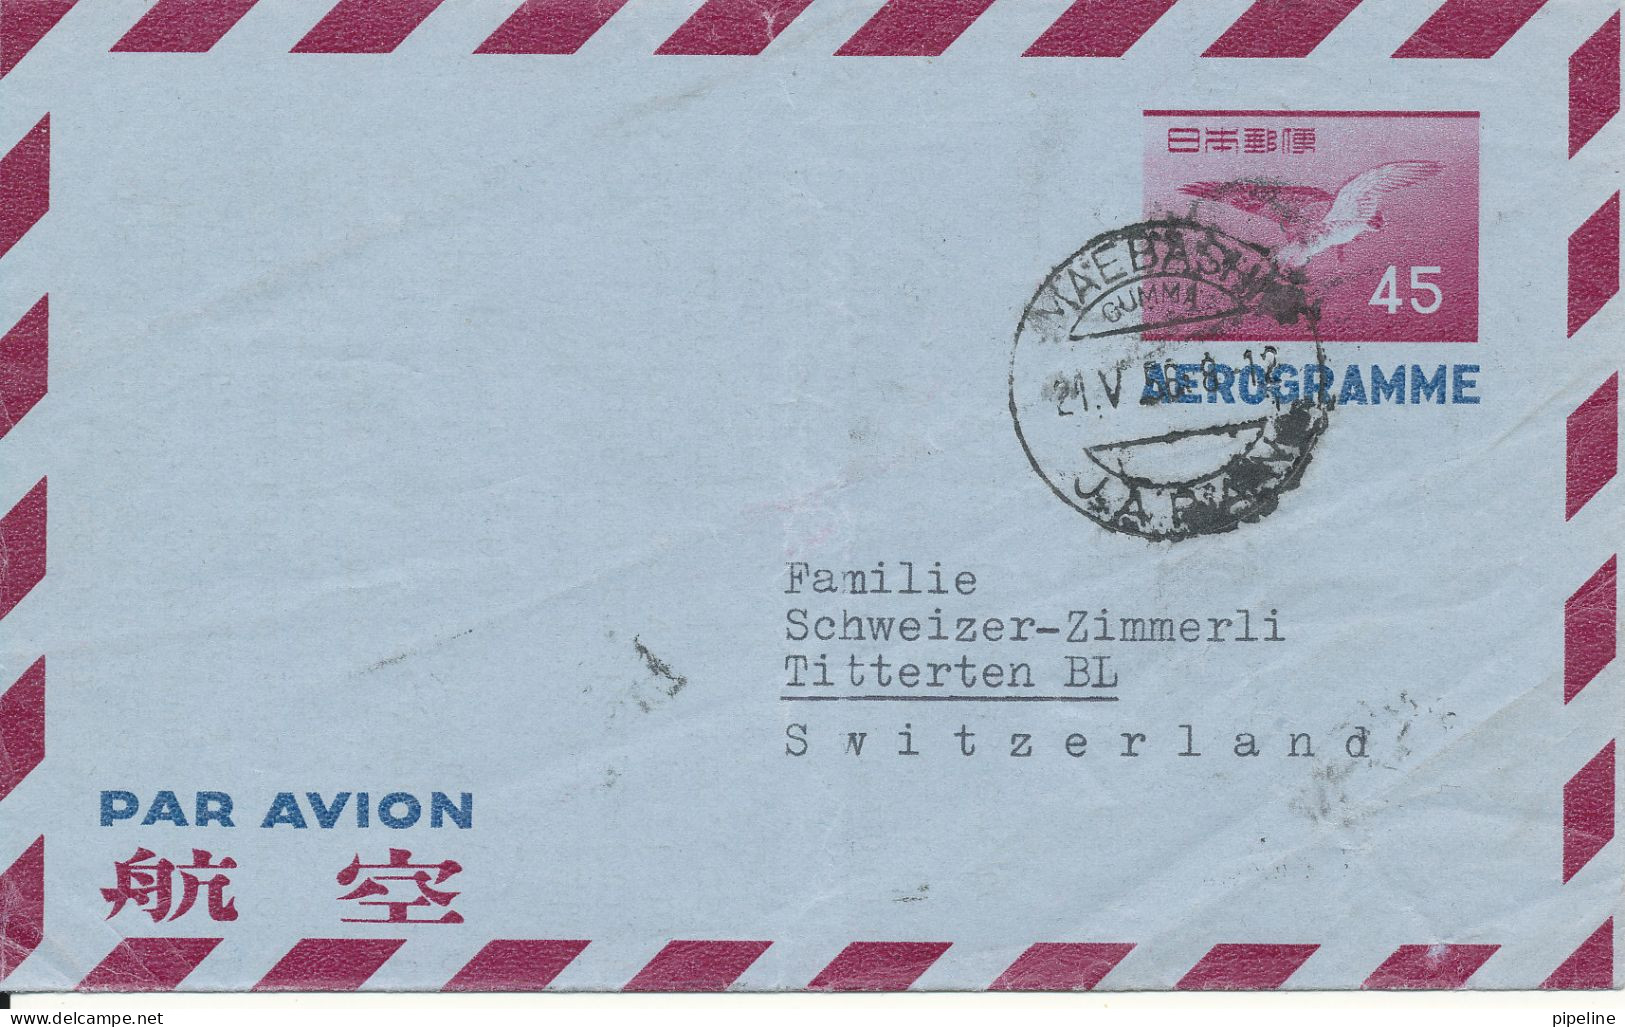 Japan Aerogramme Sent To Switzerland 19-5-1956 - Aerograms